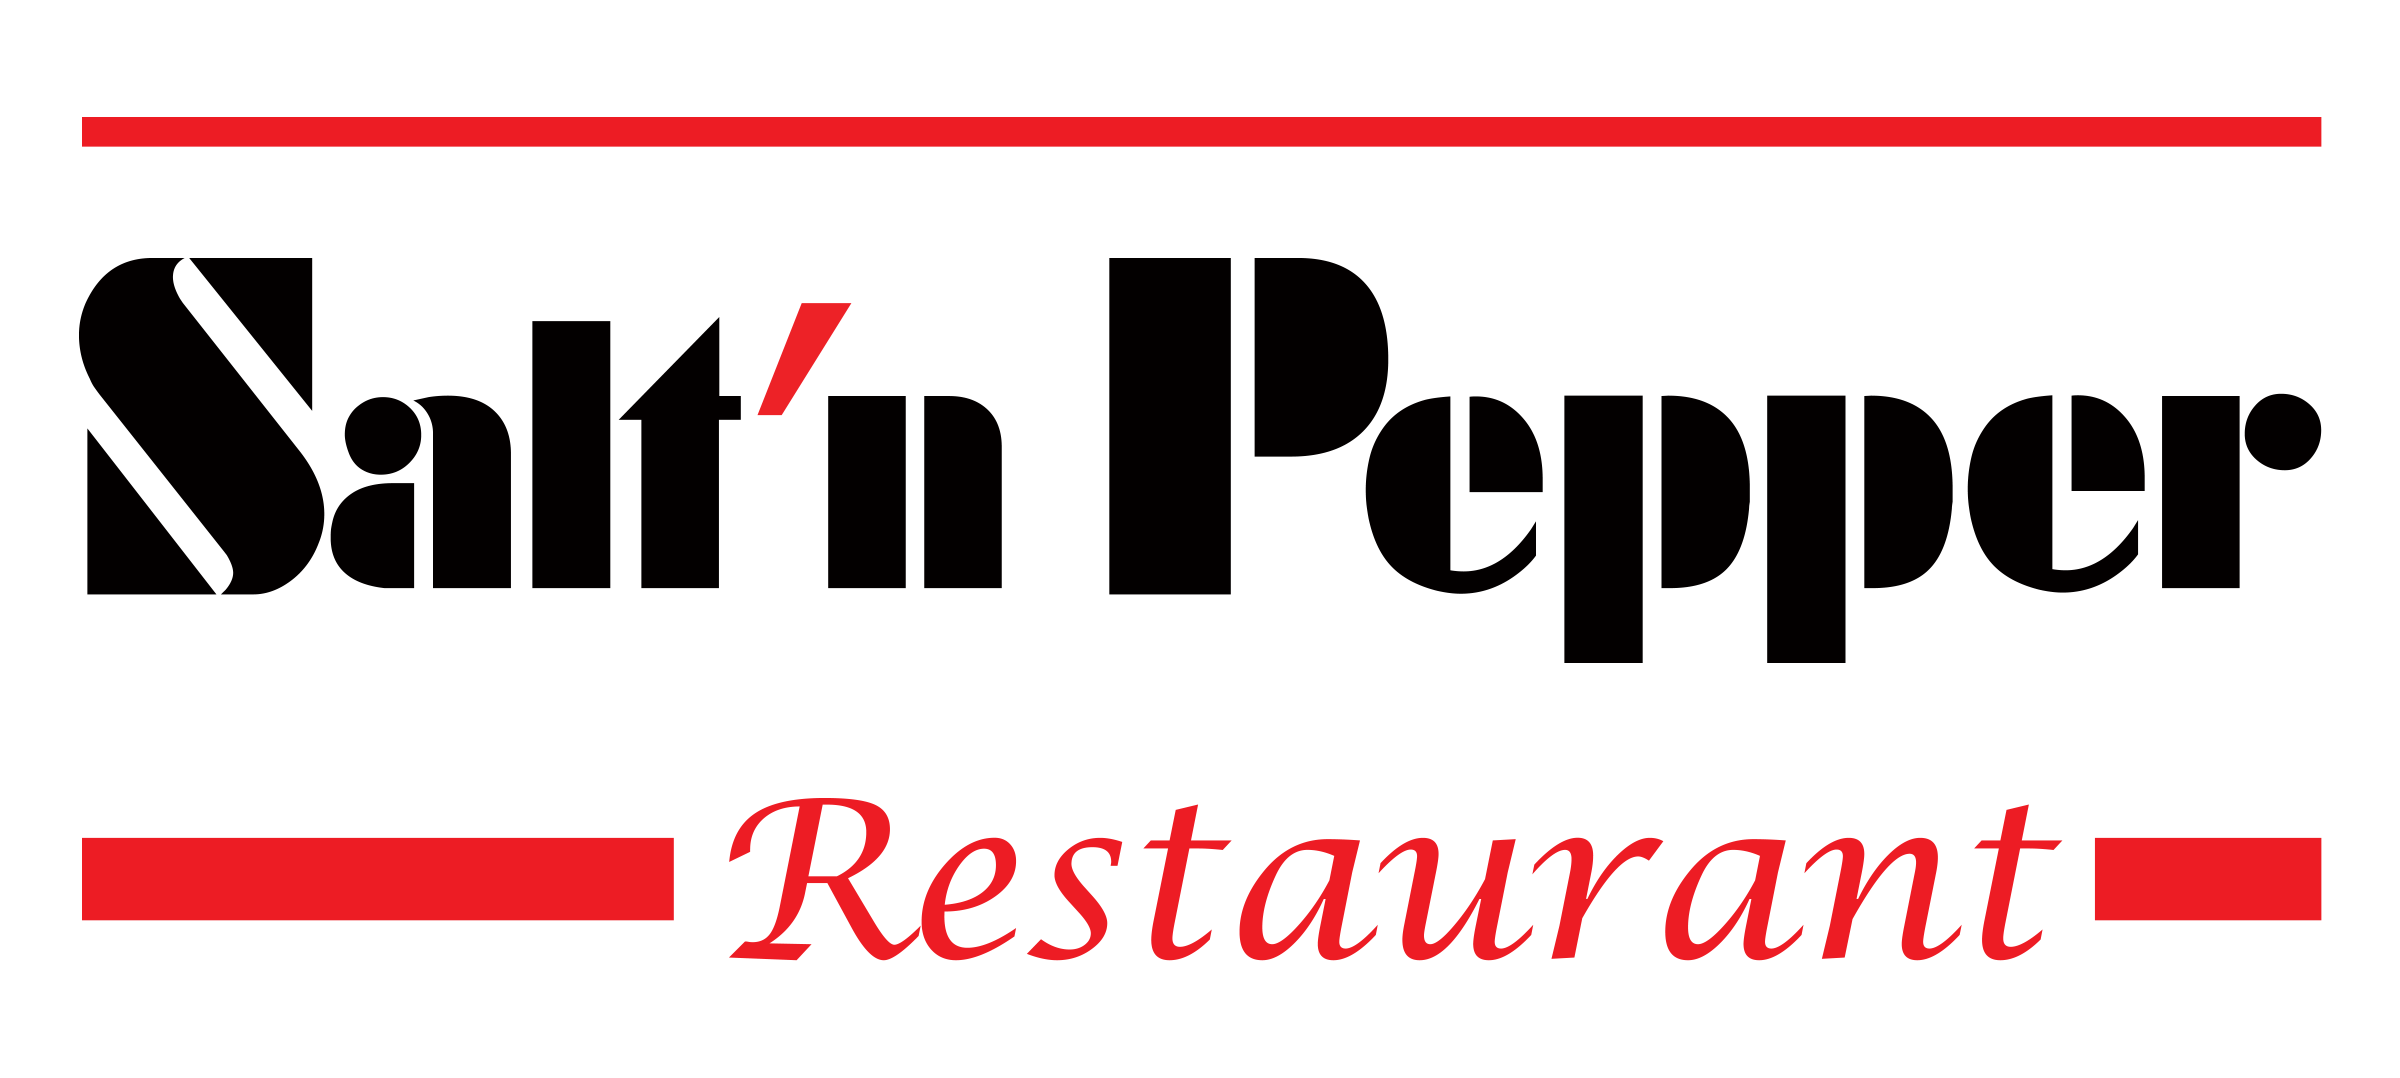 Salt n Pepper Restaurant Liberty